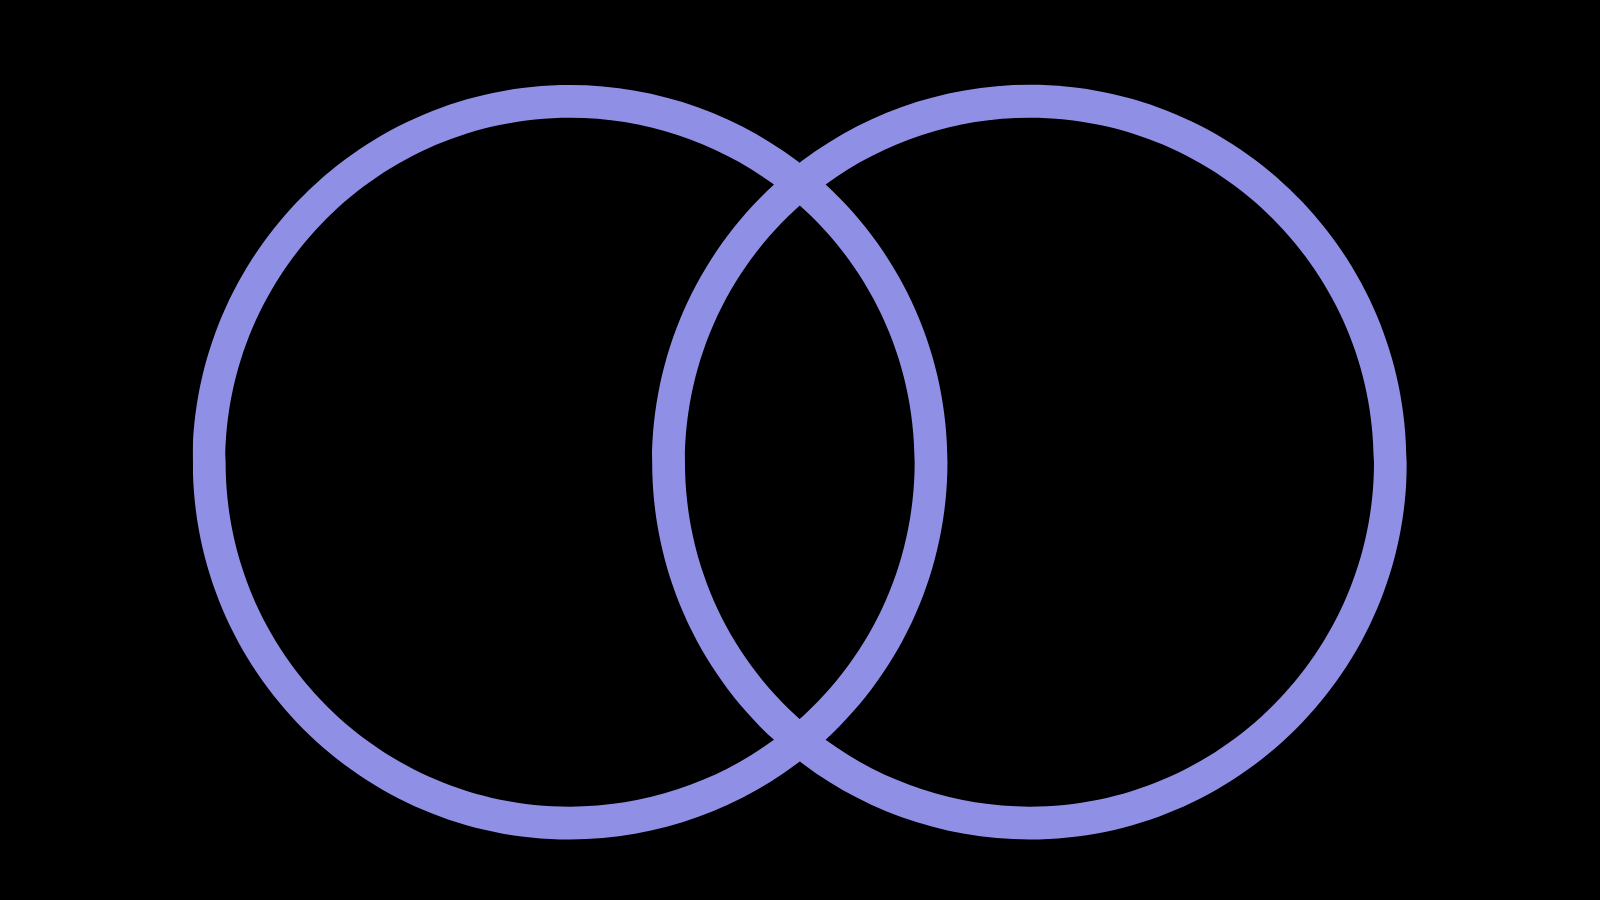 A purple blank venn diagram